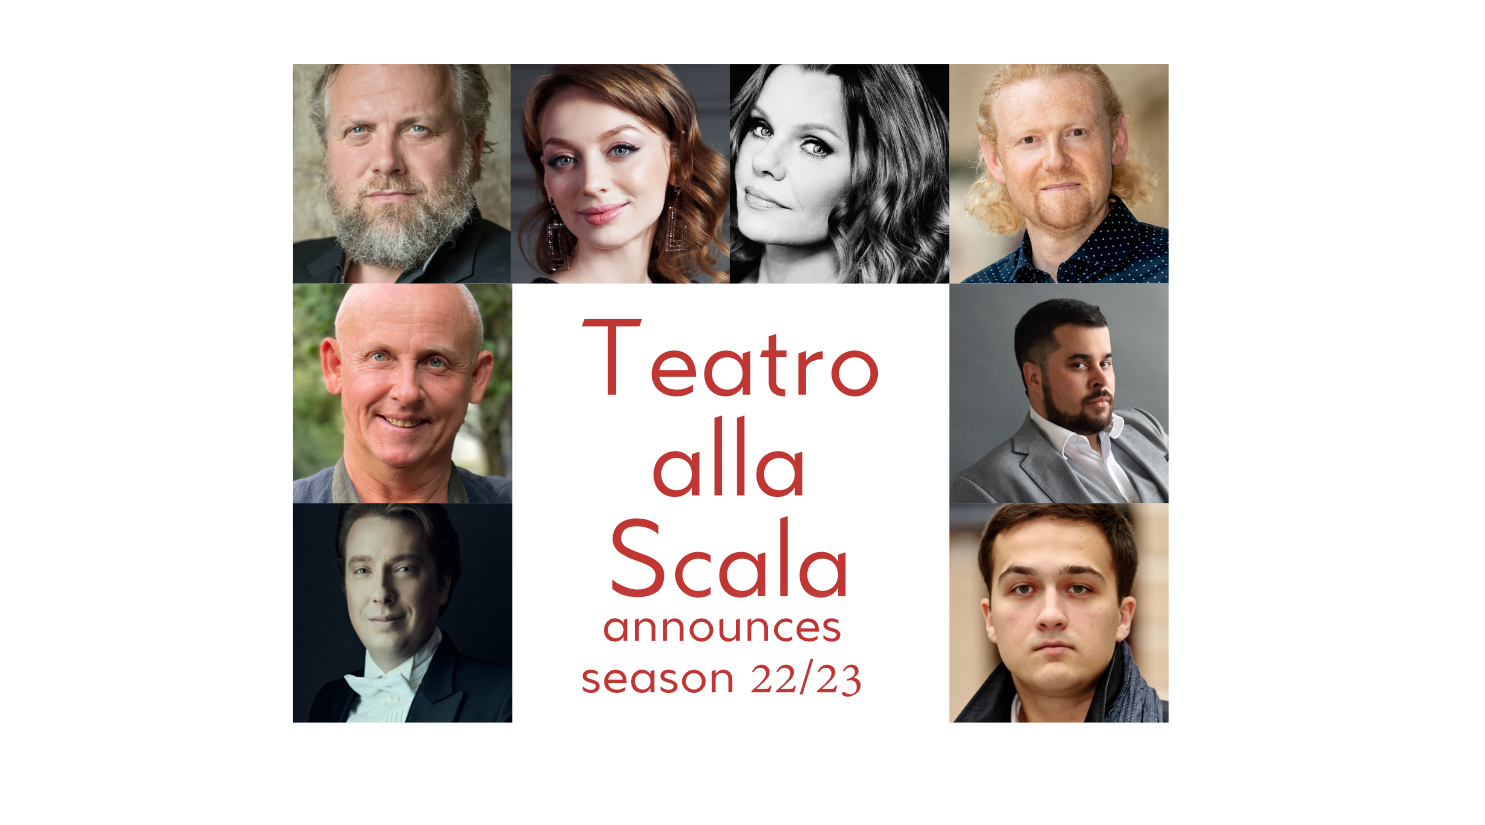 New Season at Teatro alla Scala is announced 